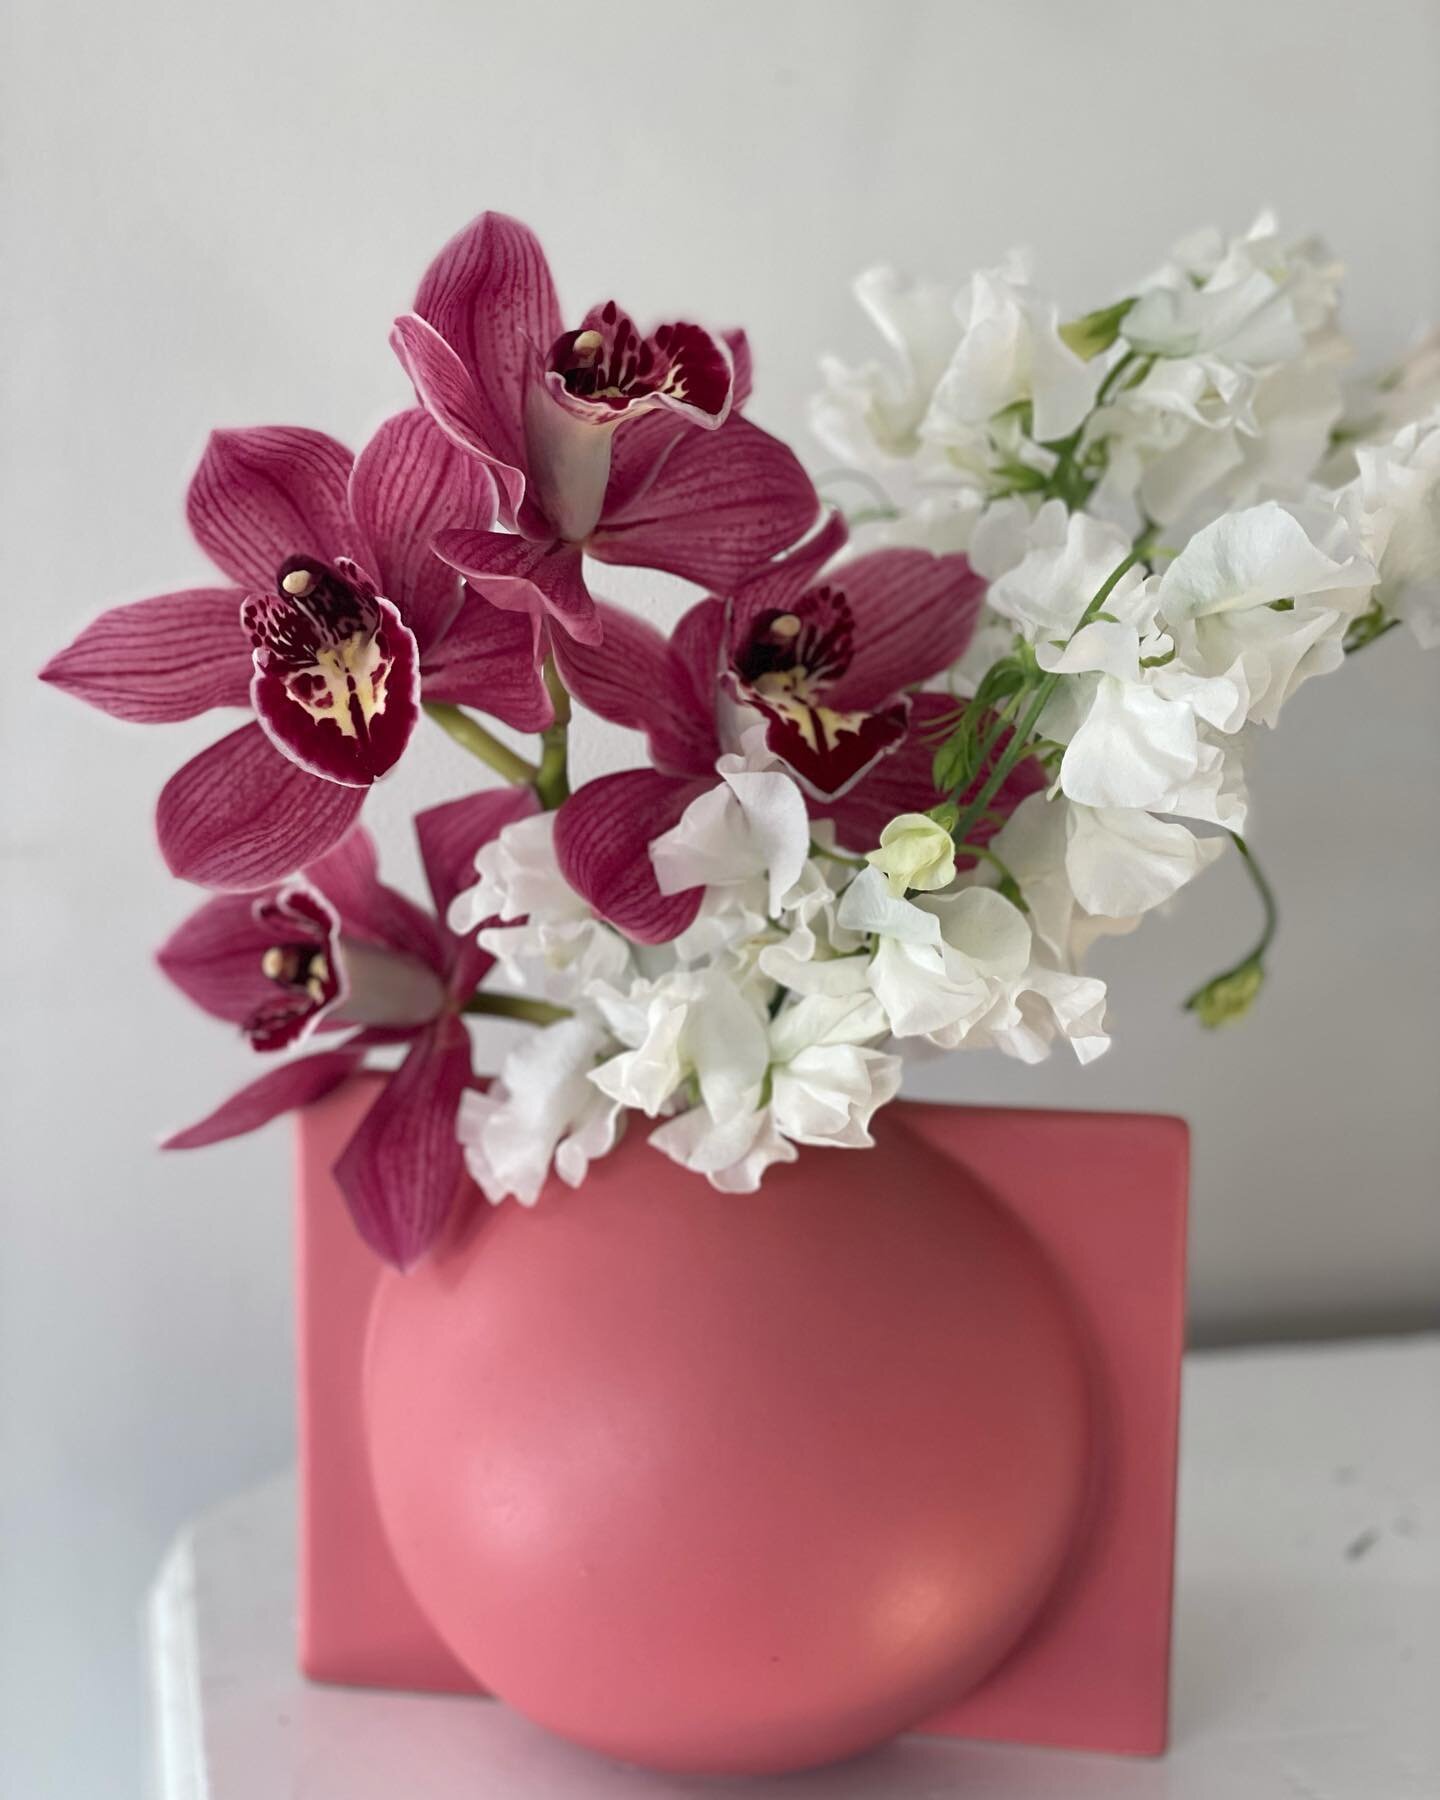 Sunday Blooms 
Flowers for Sunday 
Vases and flowers and more 
.
.
.
.
#cymbidium #sweetpeas #elegant #freshflowers #stunningvase #flowersforsundays #prettyflowers #sundayfunday #wedeliver #lockdown #lockdown2021 #flowersforyou #bringhappinessinside 